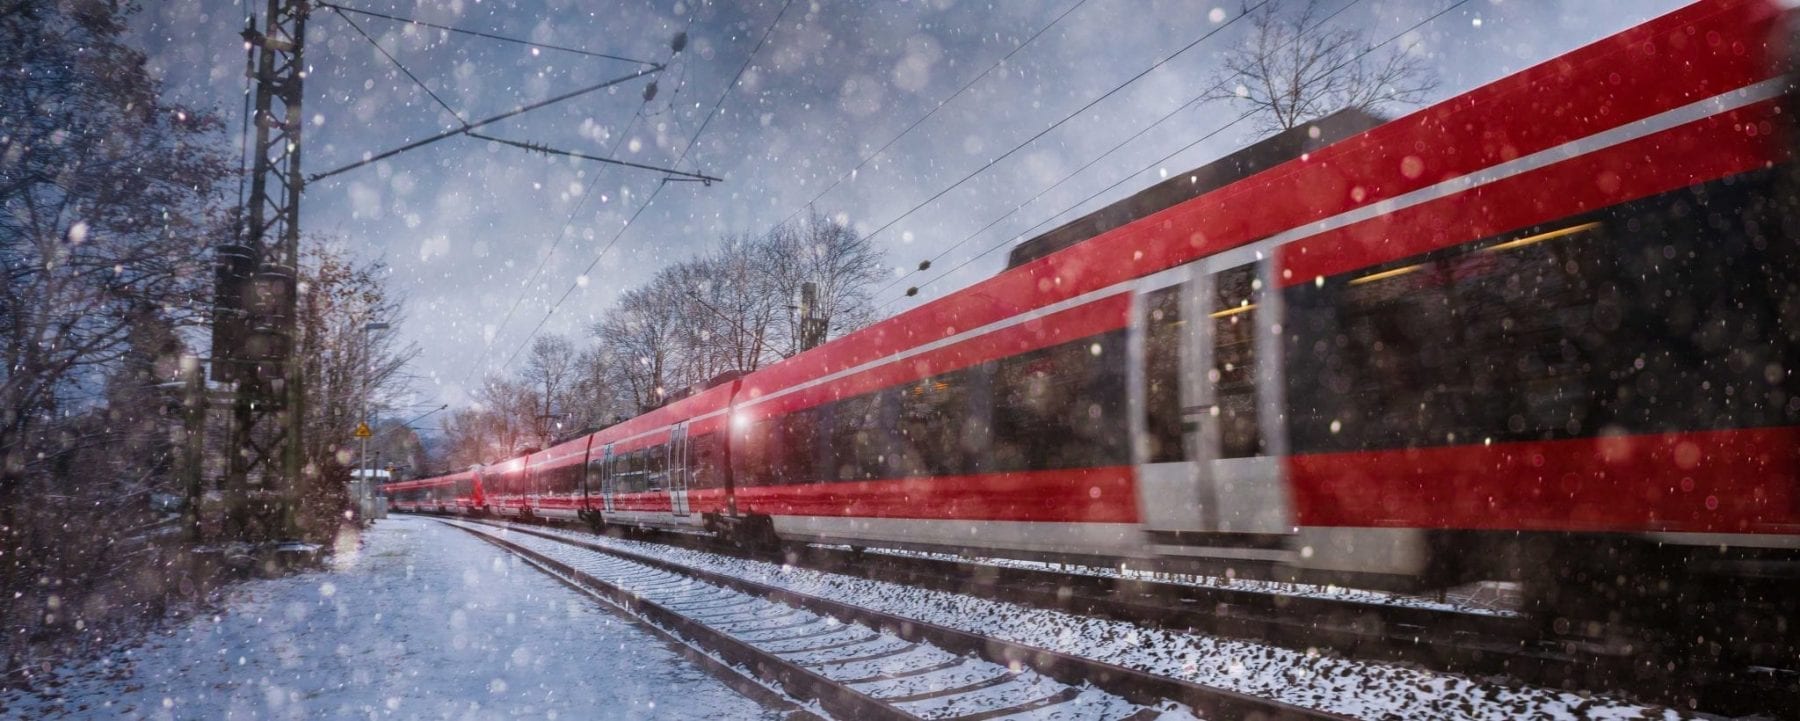 Train going through the snow